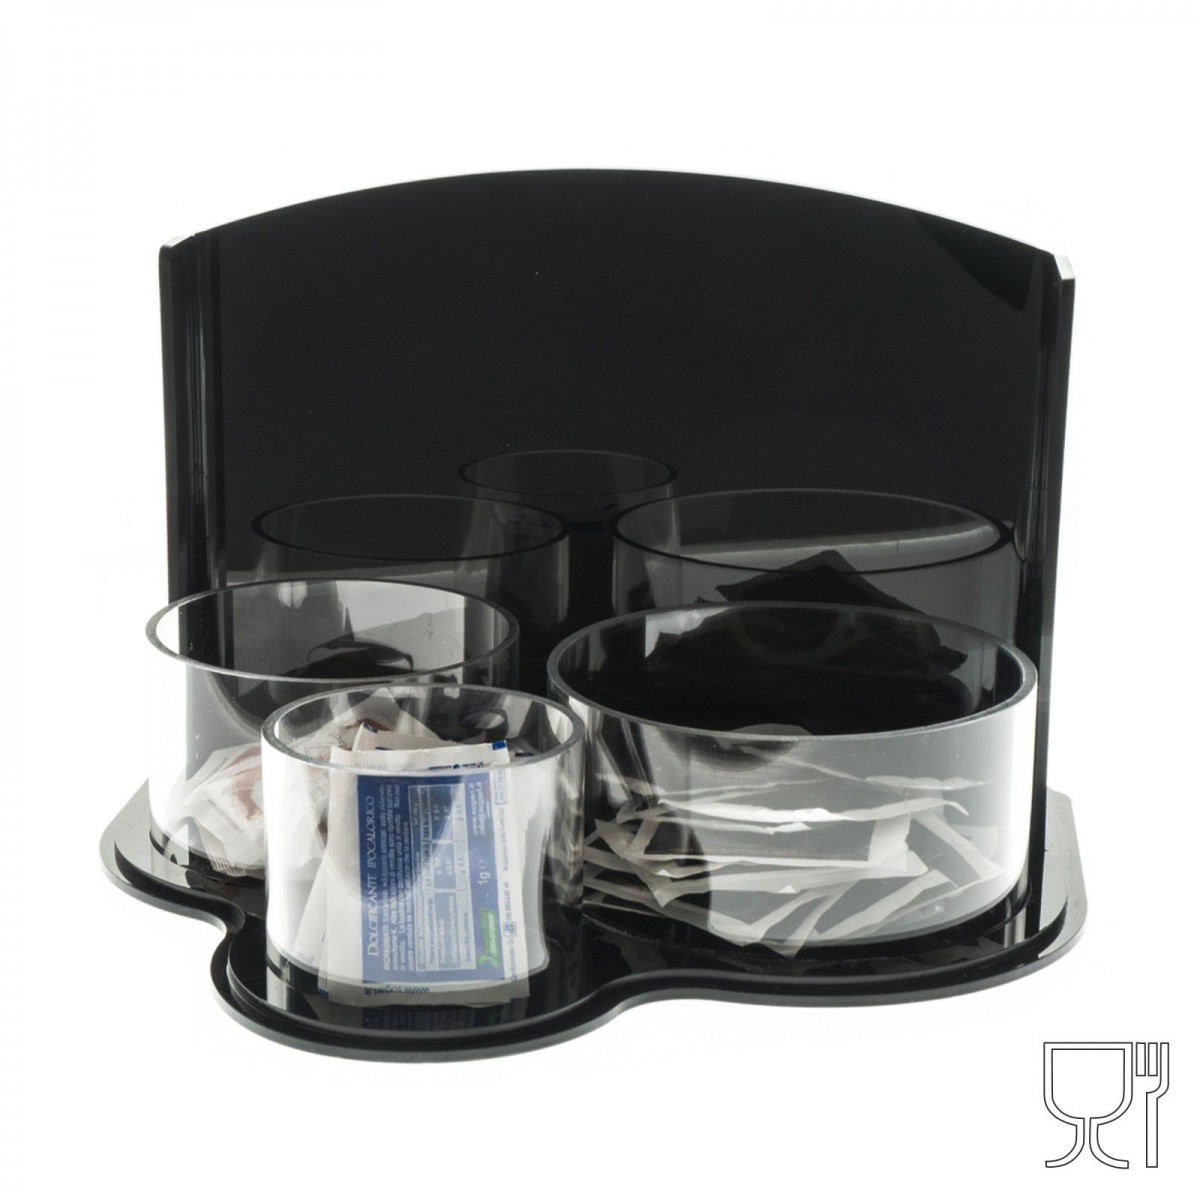 E-176 POB - Porta bustine da zucchero in Plexiglass nero e trasparente - Misure: 24 x 21 x H18 cm